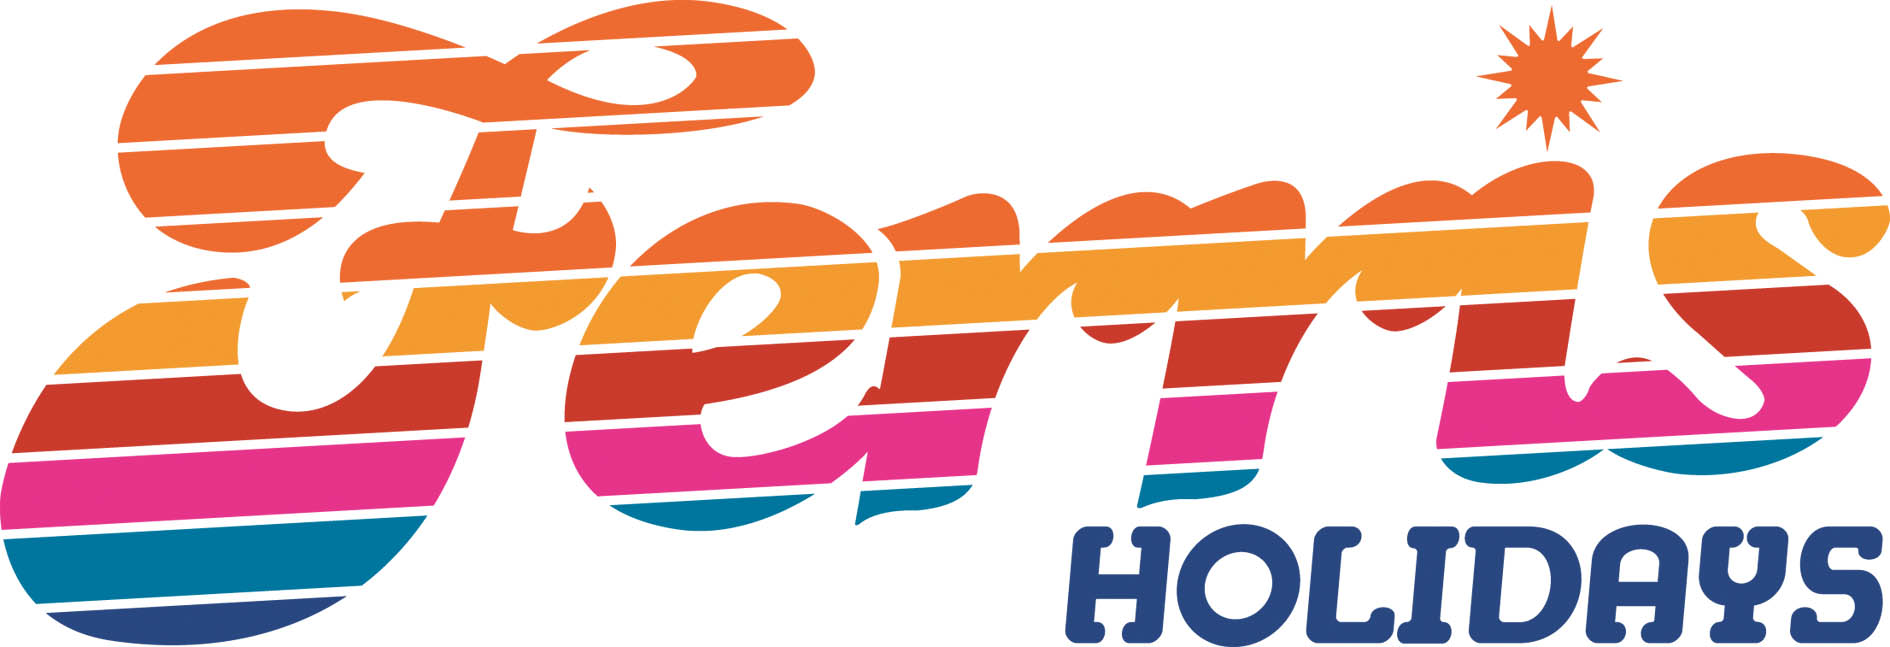 Ferris Holidays Logo